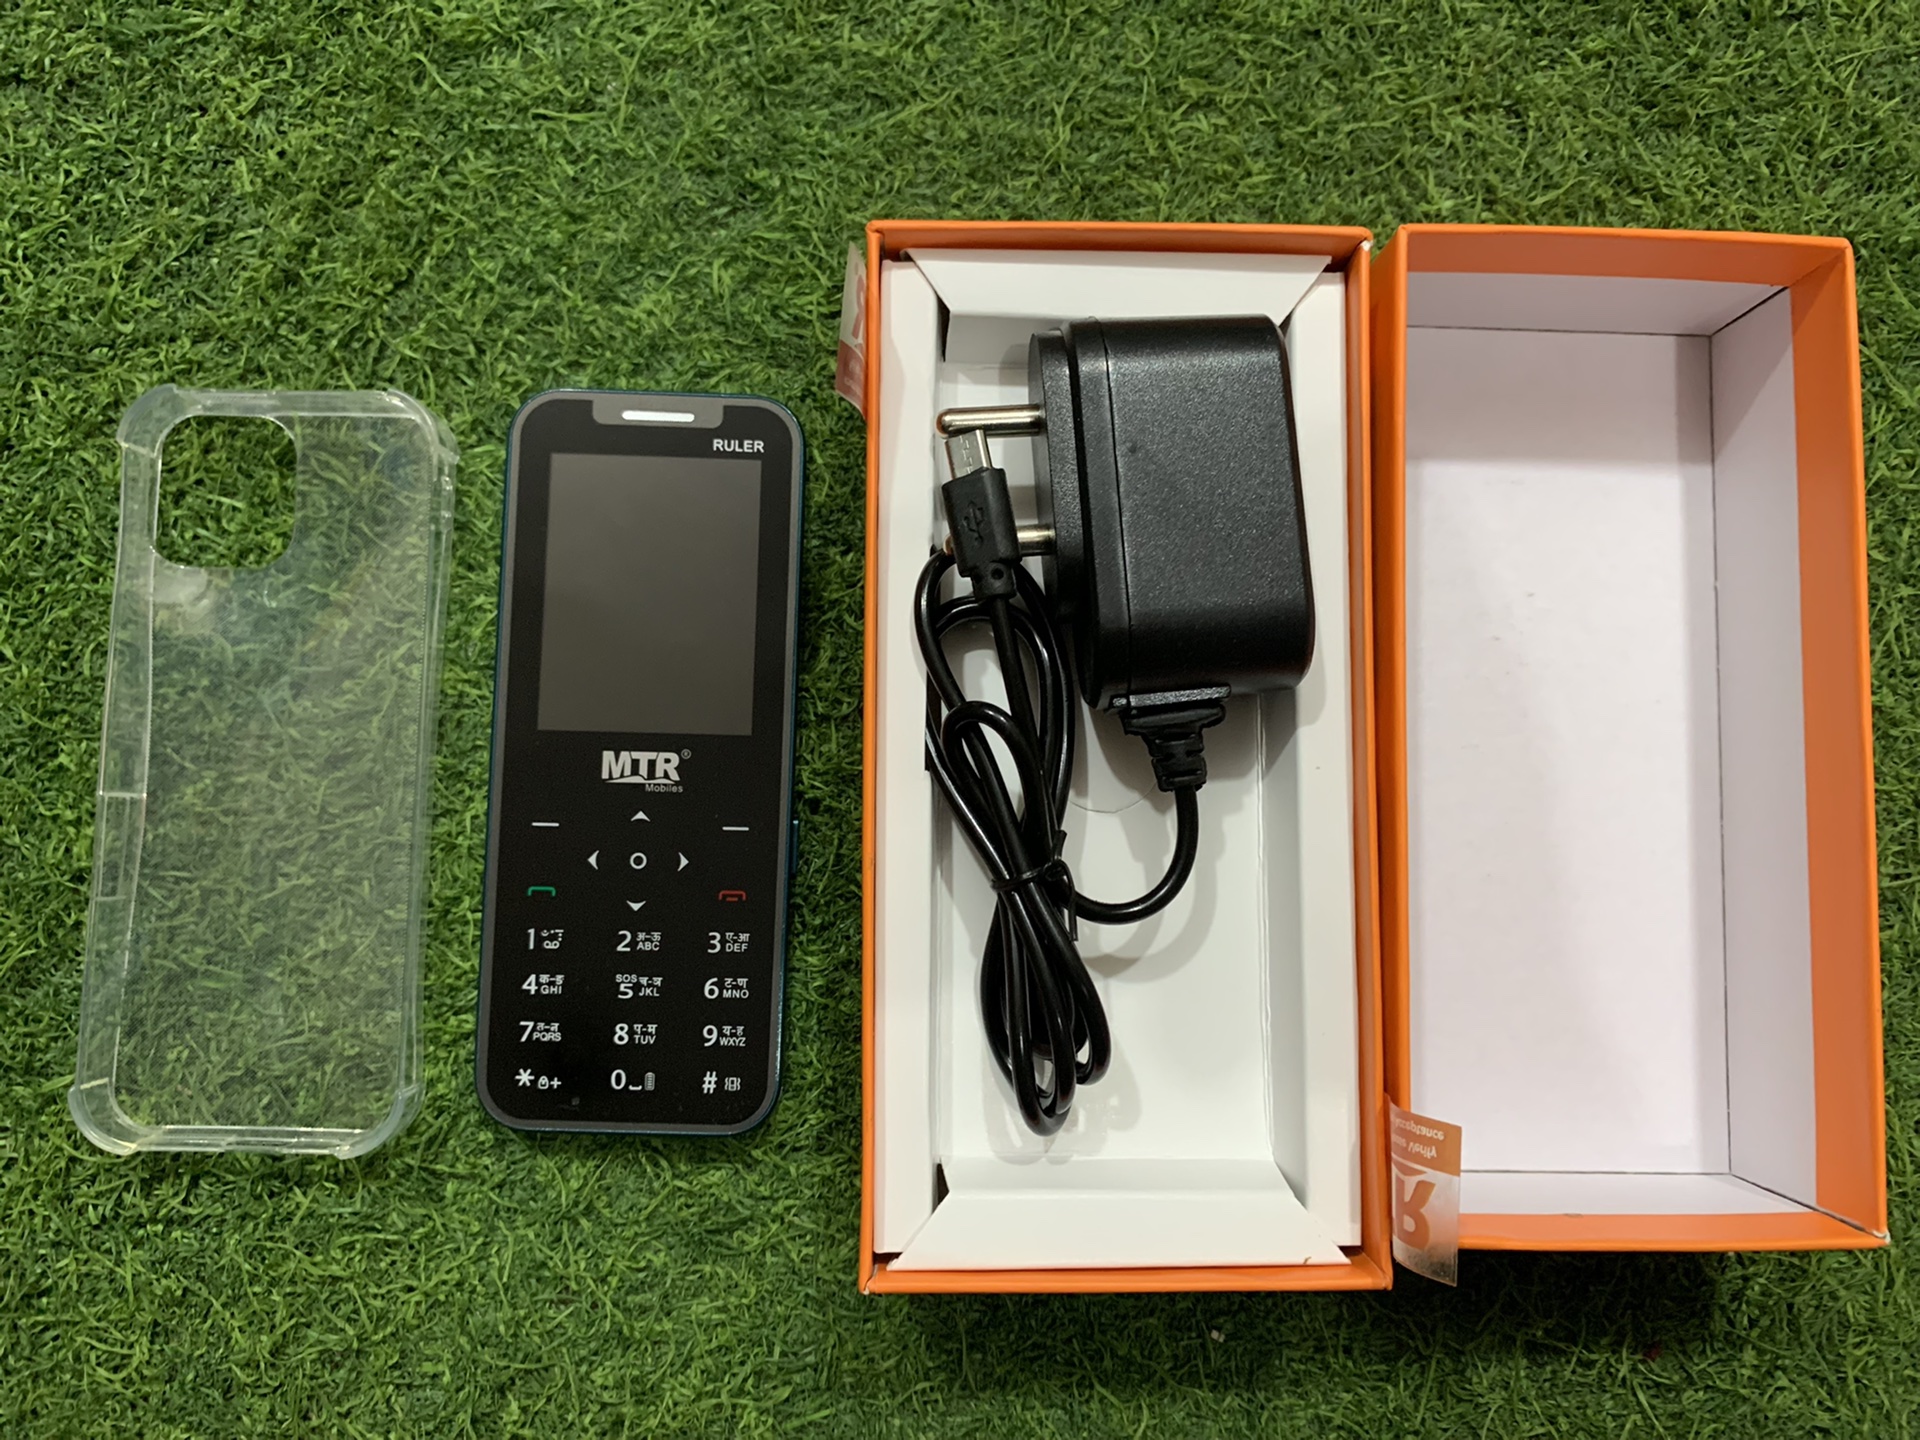 MTR Ruler New Mobile Phone Dual Sim 3 Month Warranty  - Black